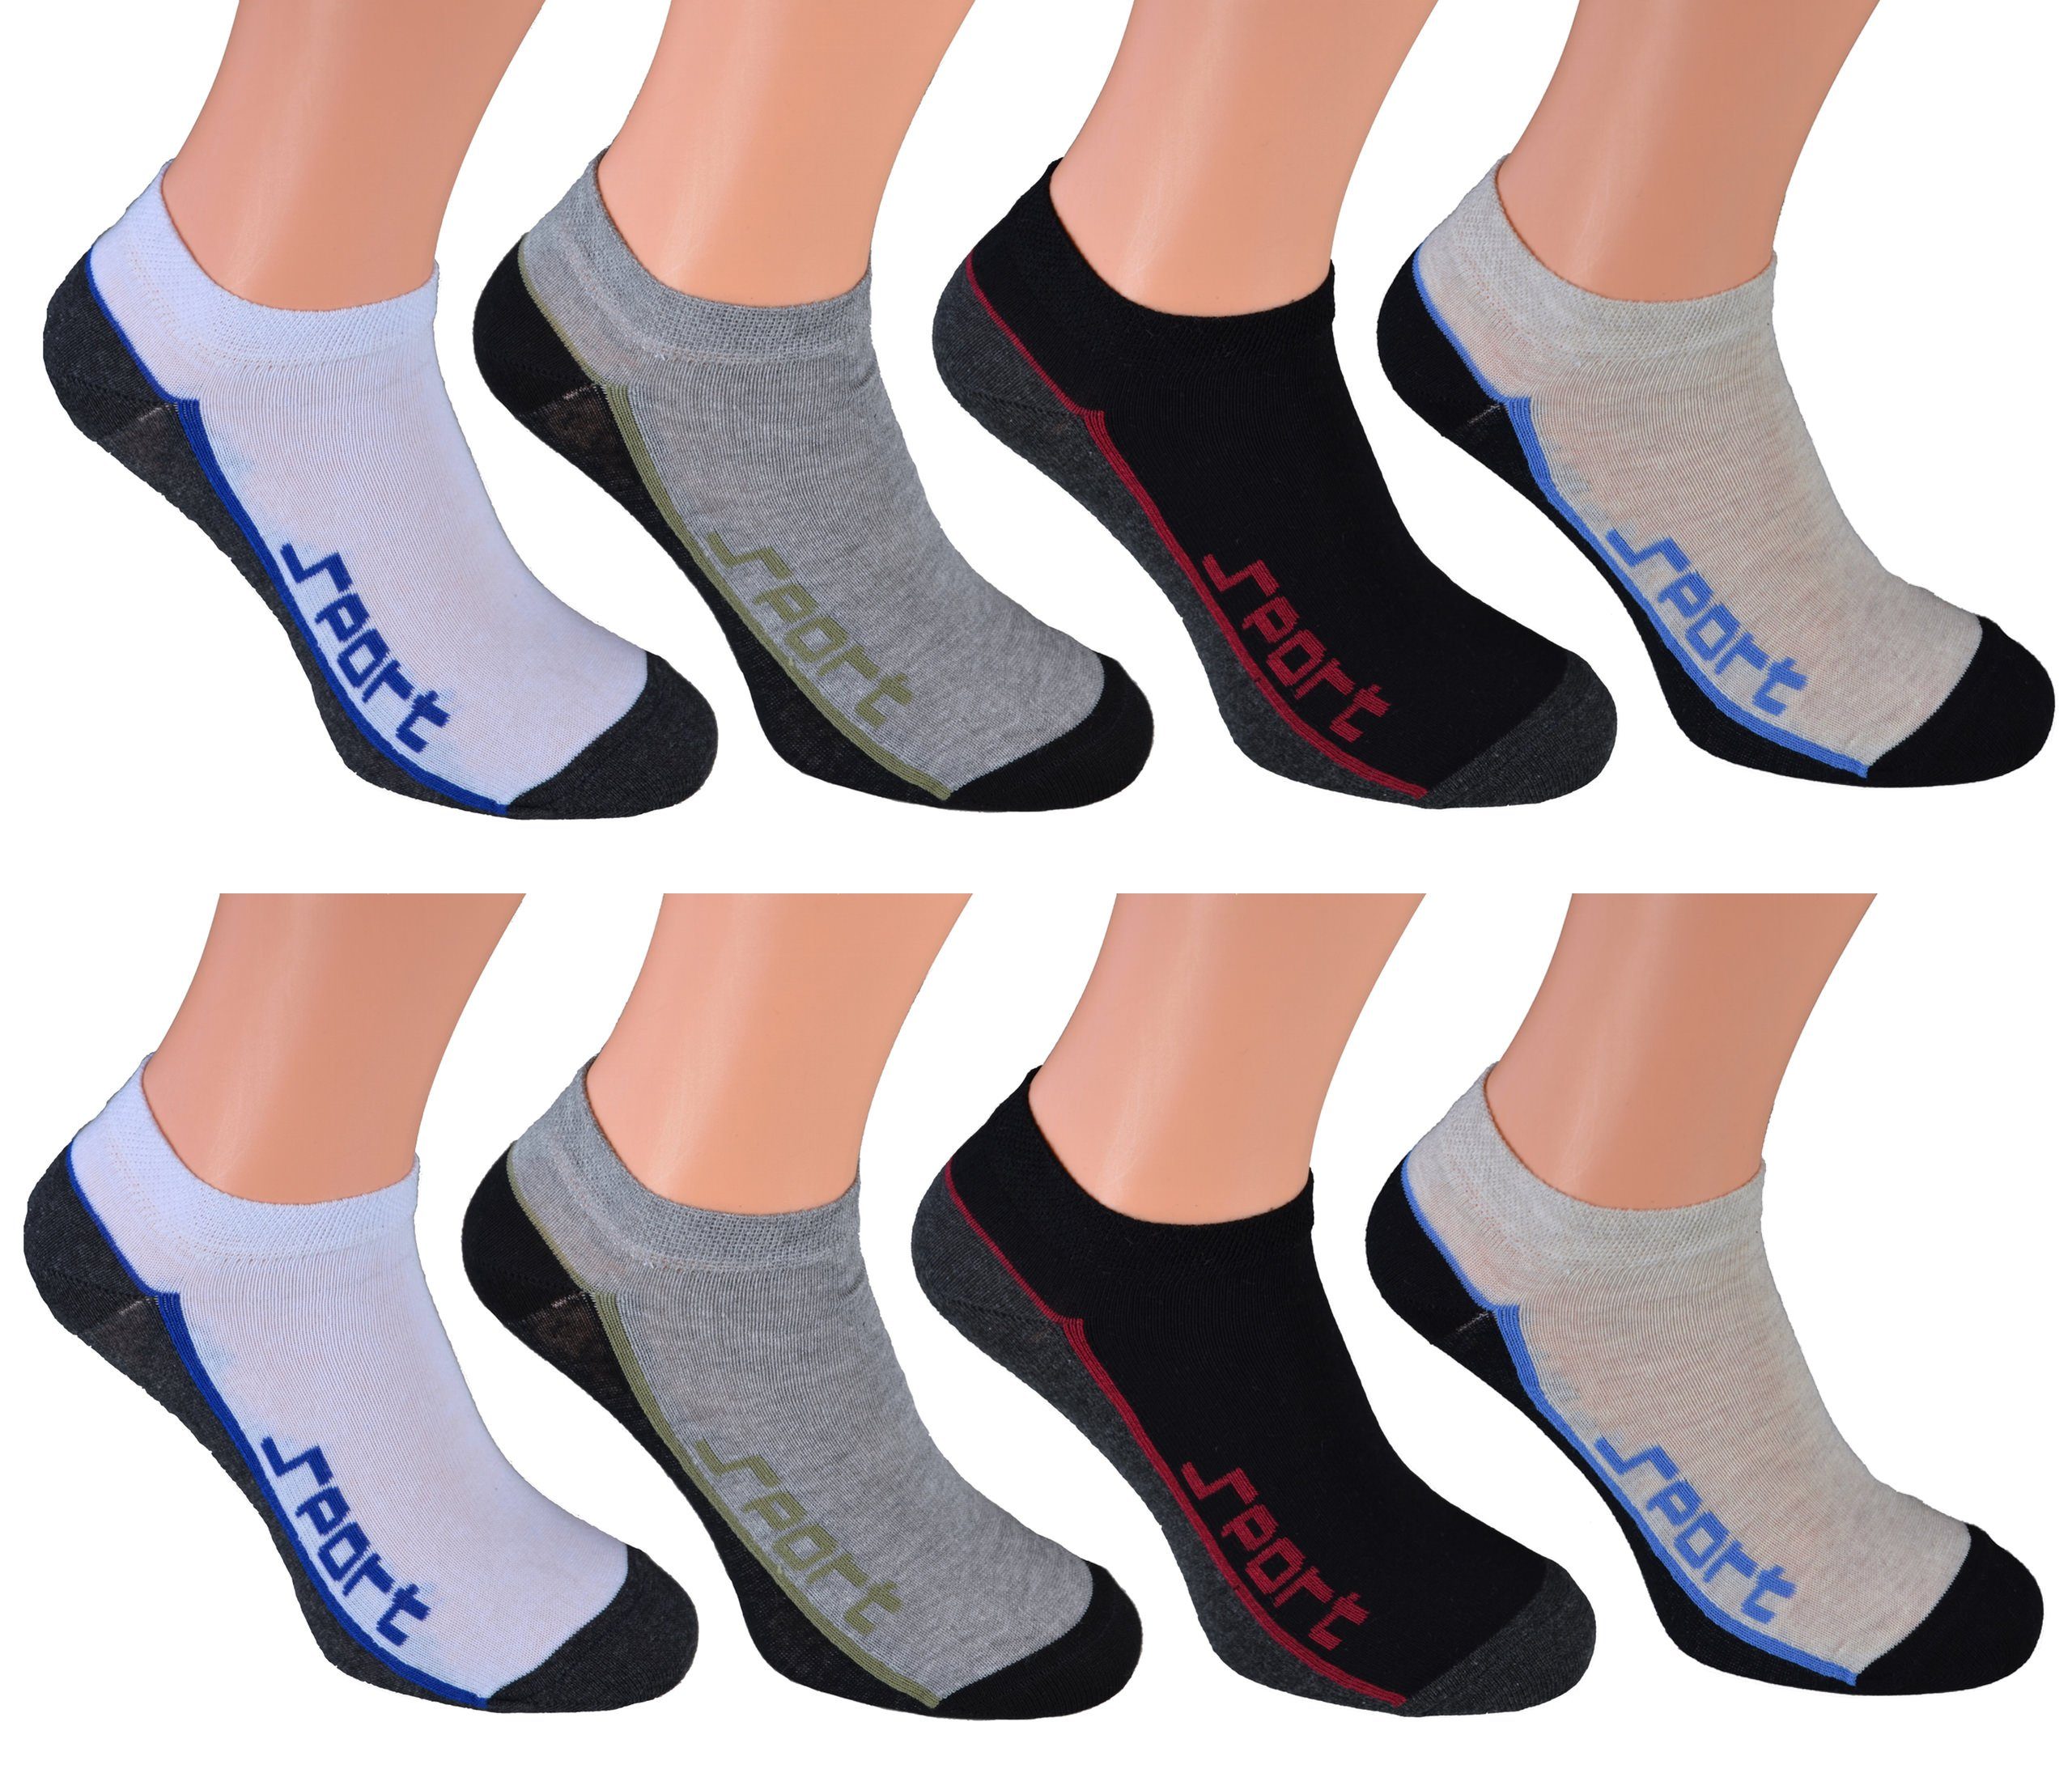 Baumwolle Cocain - Sneakersocken Socken Modelle Herren Sport verschiedene (8-Paar) 8 Söckchen underwear Füsslinge Paar Sneaker für